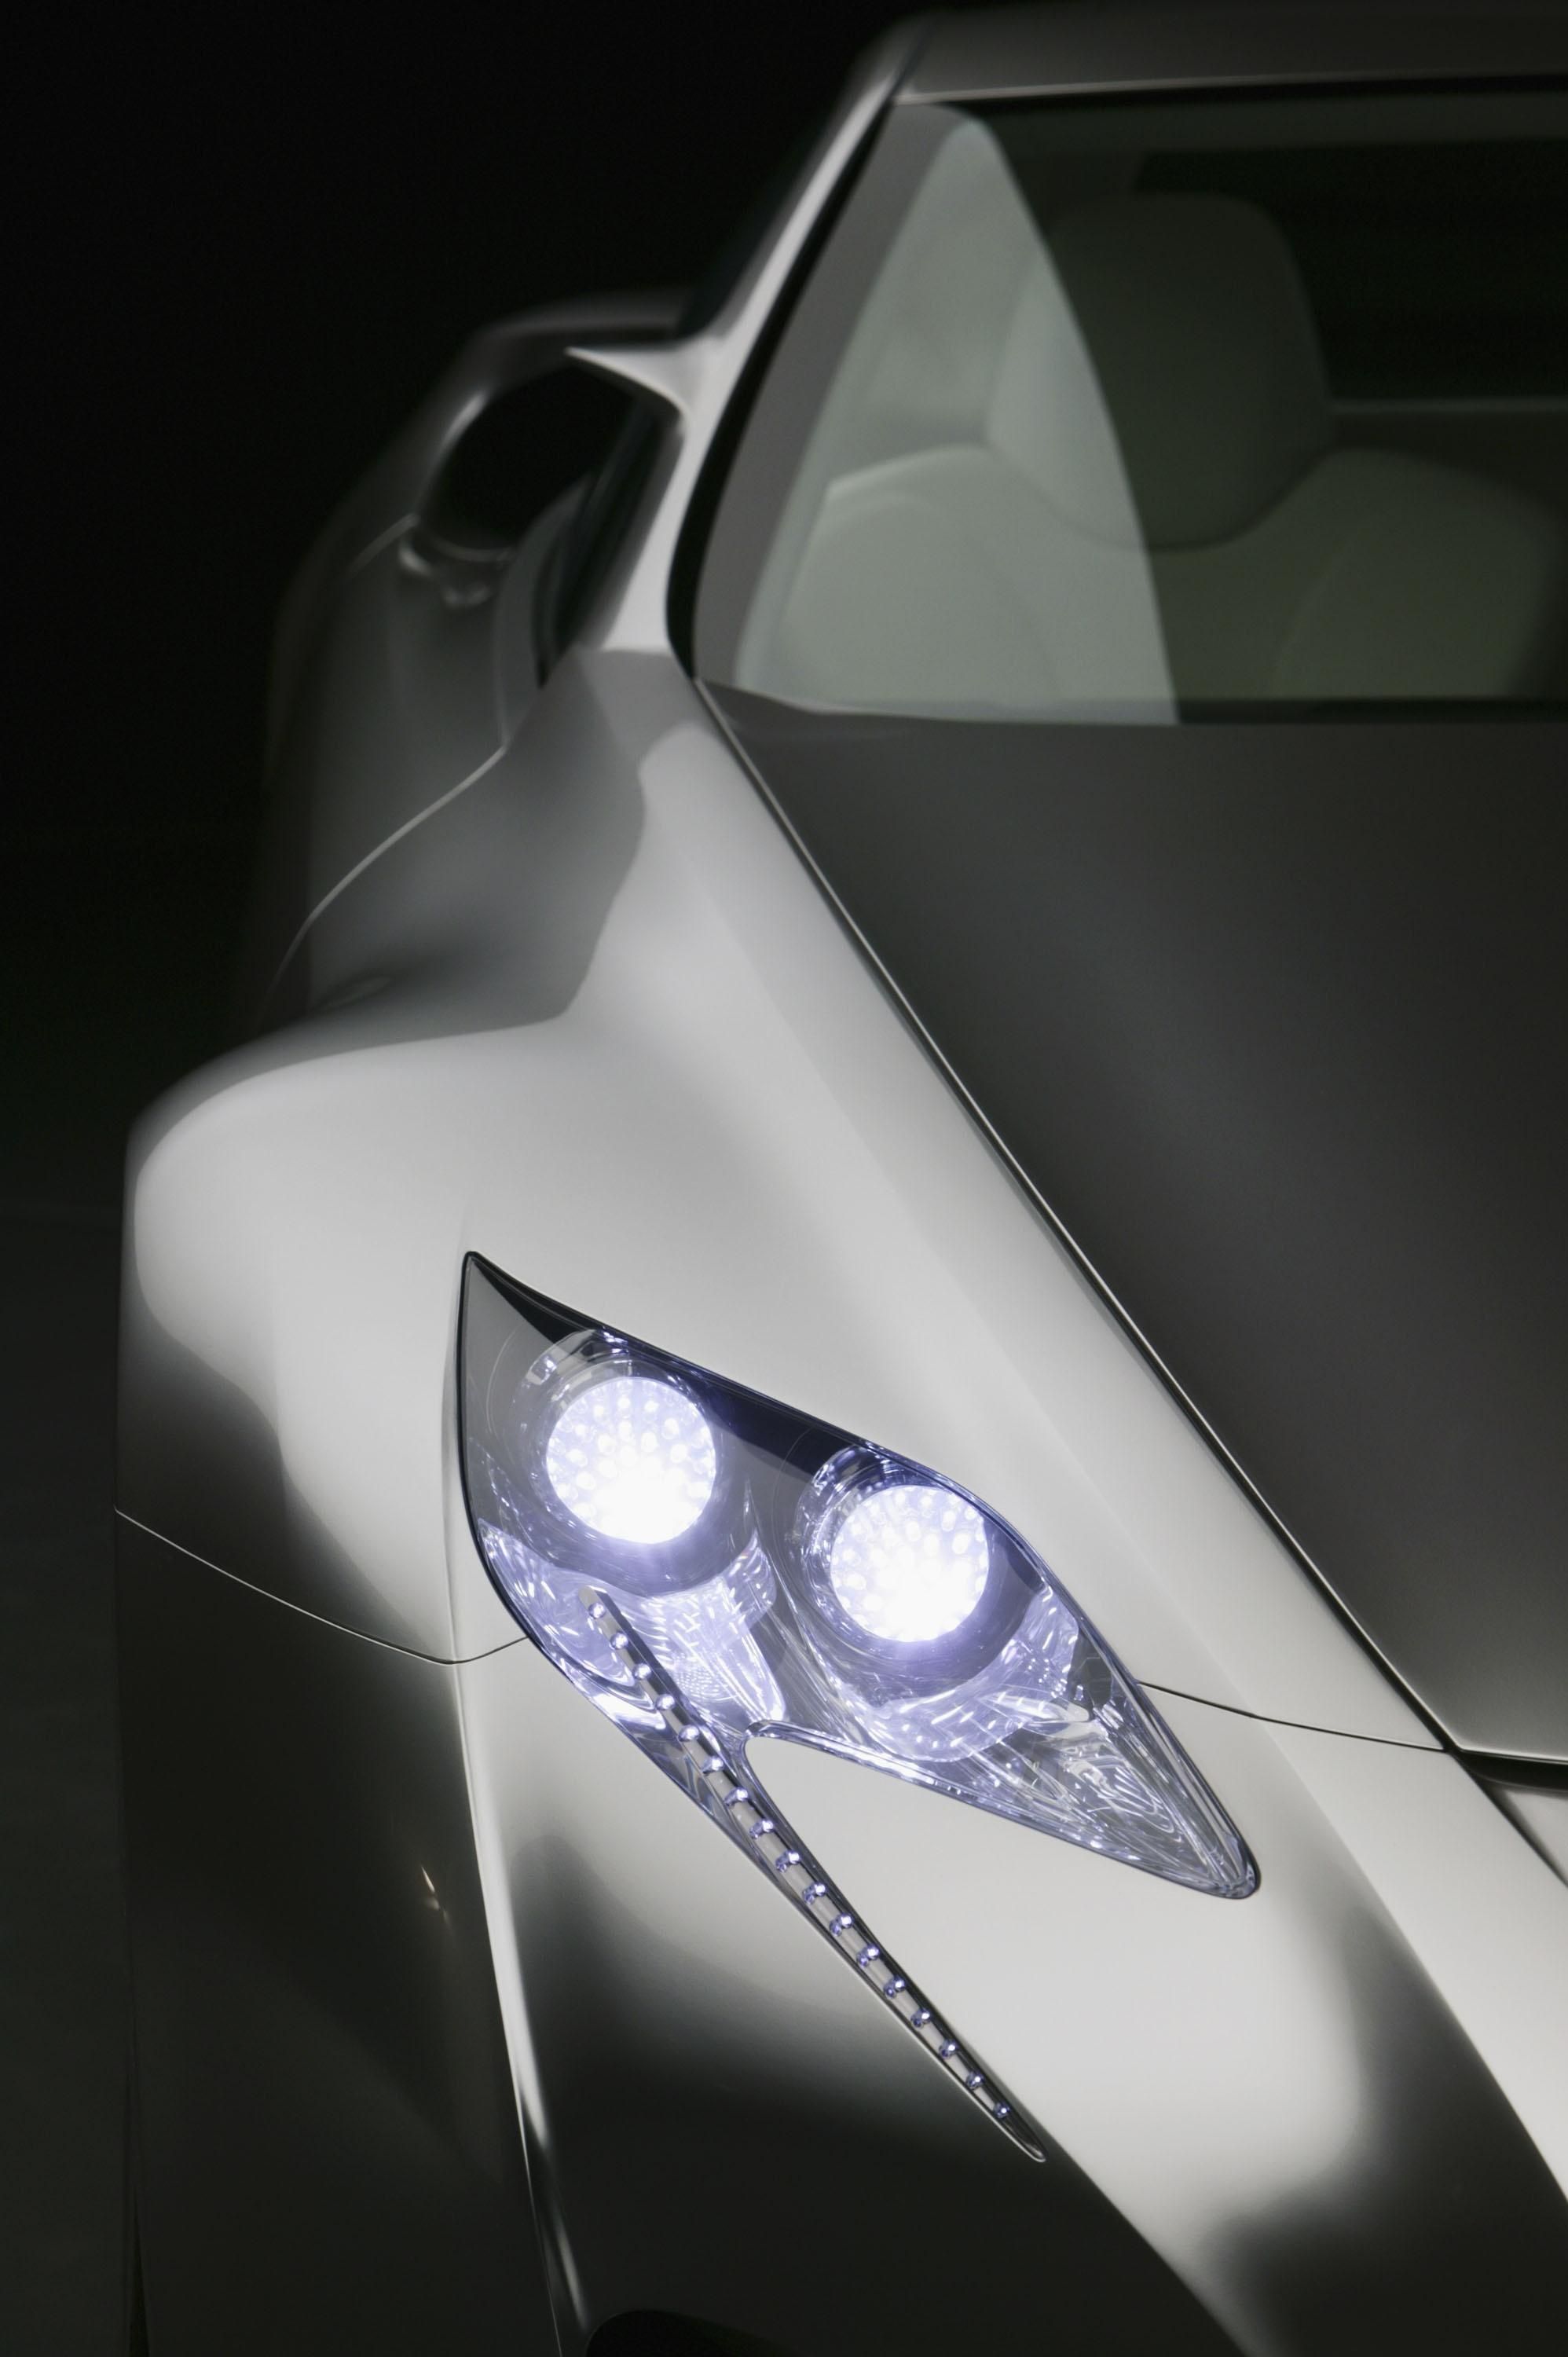 2007 Lexus LF-A Sports Car